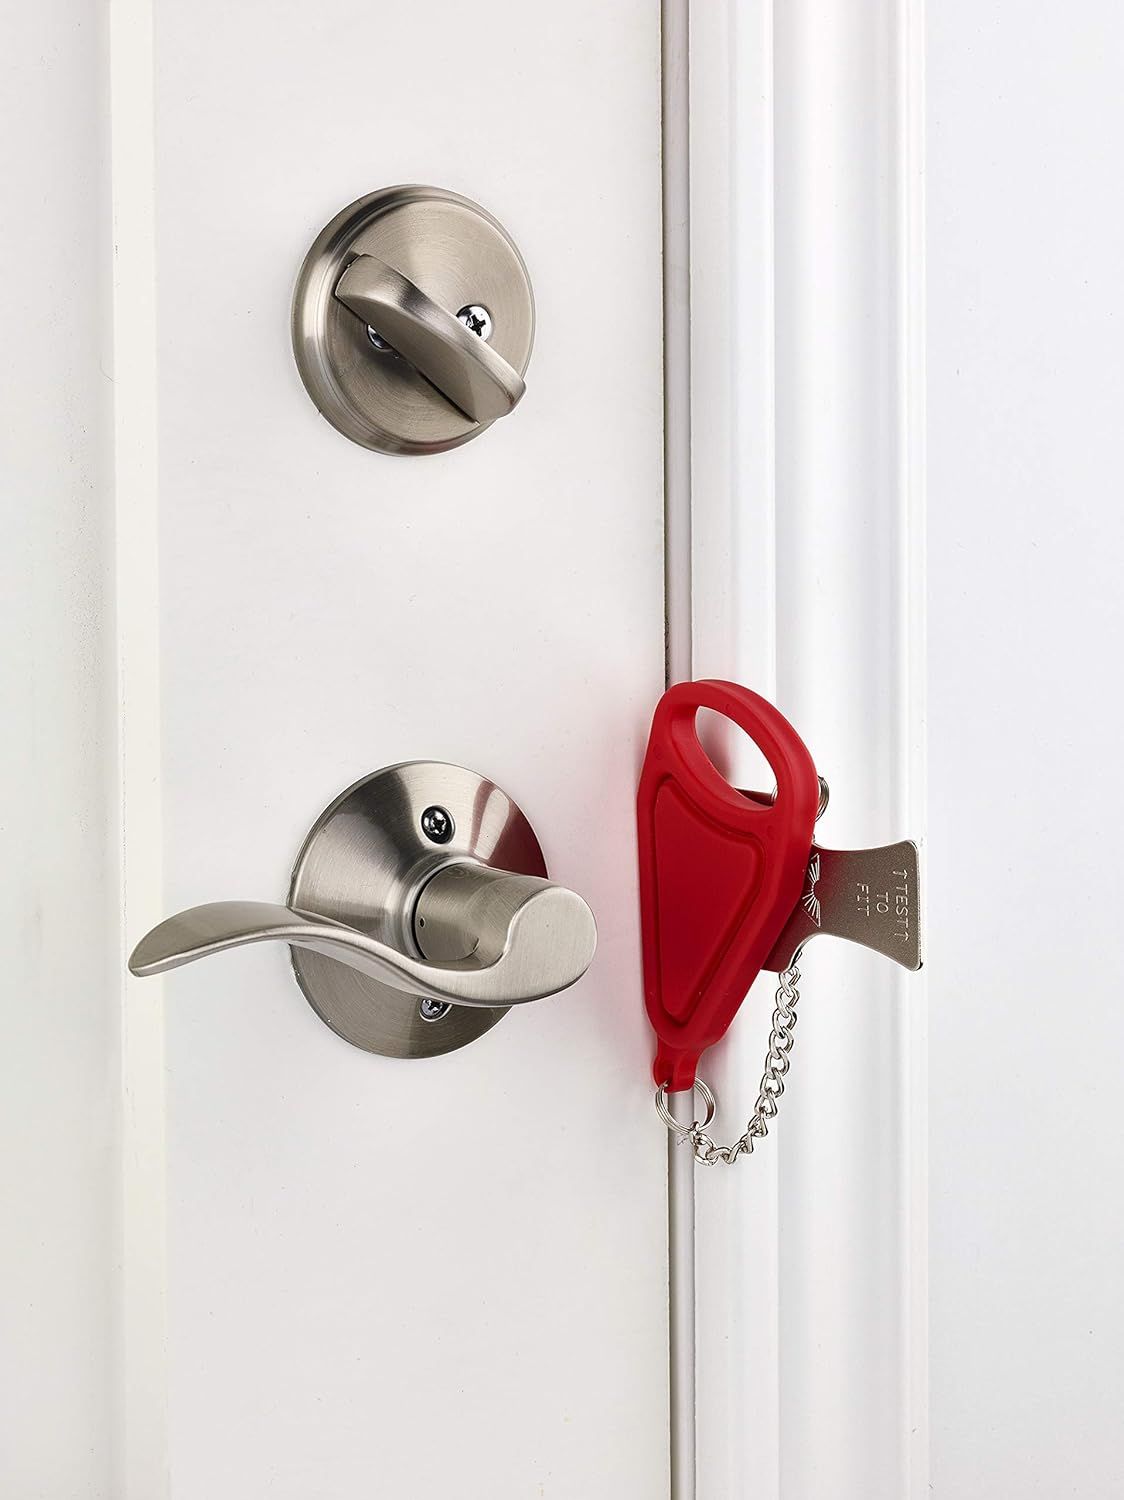 Addalock the Original Portable Door Lock by Rishon Enterprises Inc. (1 Piece), for Home Security,... | Amazon (US)